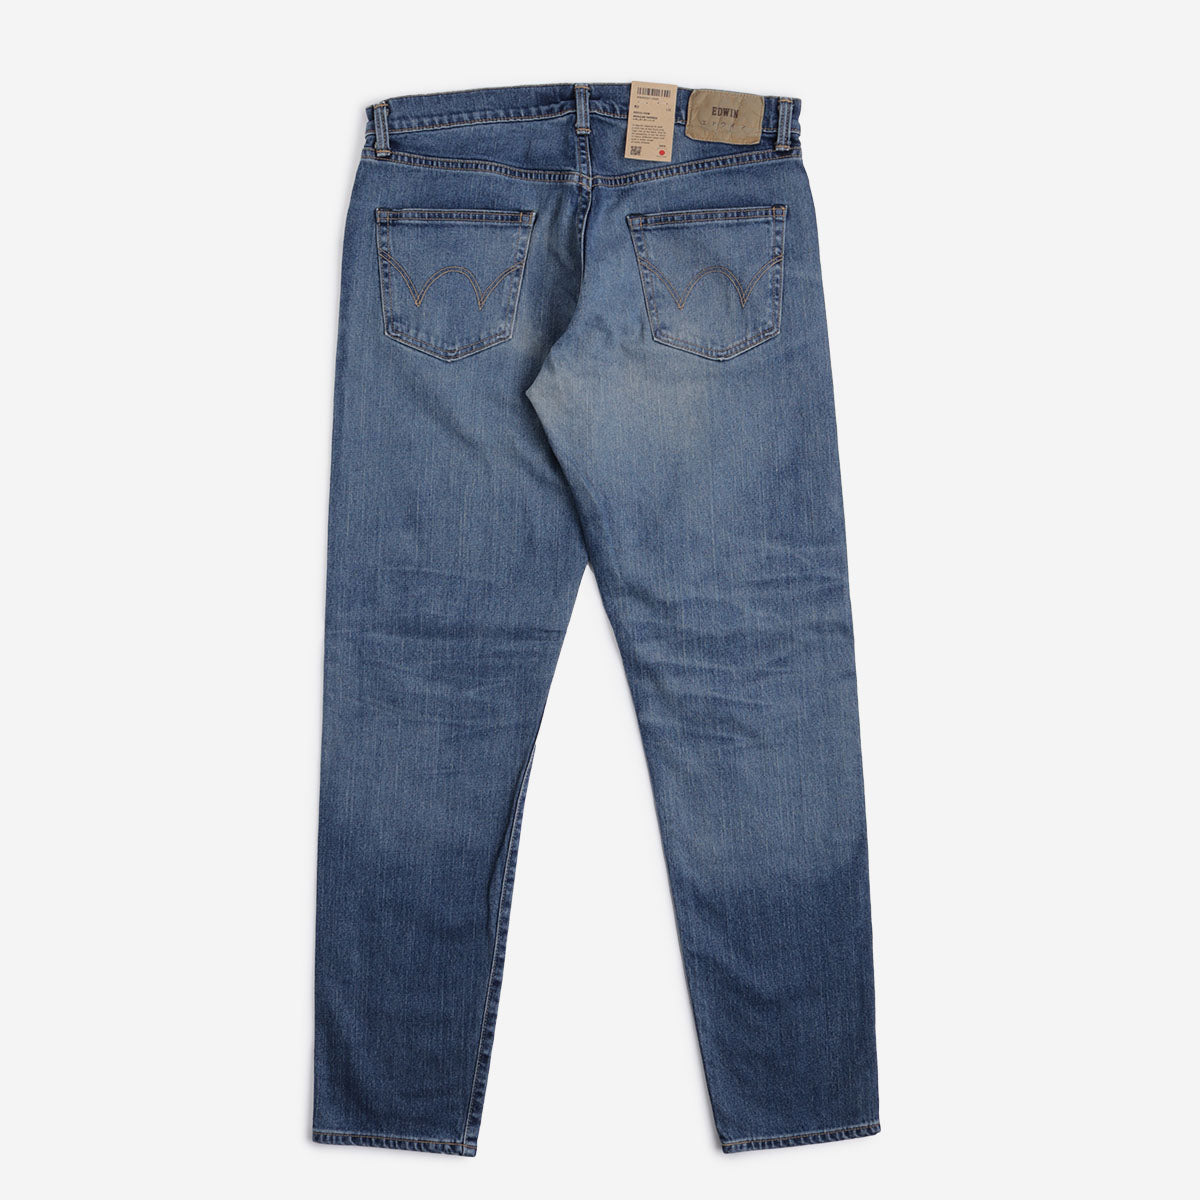 Edwin Regular Tapered Kaihara Pure Indigo Stretch 13oz Denim Jeans, Blue - Light Used, Detail Shot 4